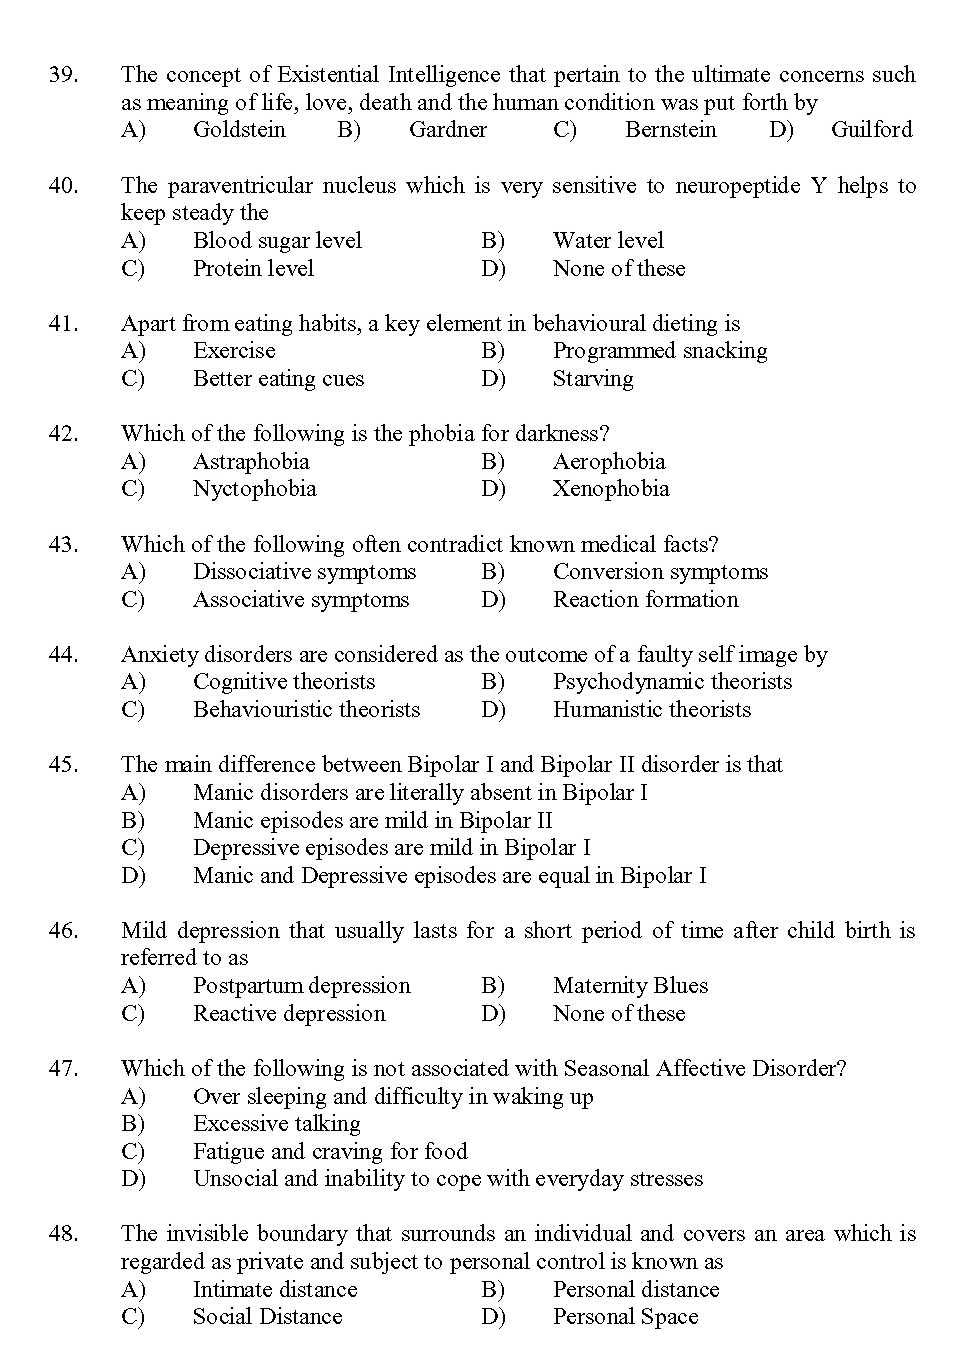 Kerala SET Psychology Exam 2013 Question Code 13626 5